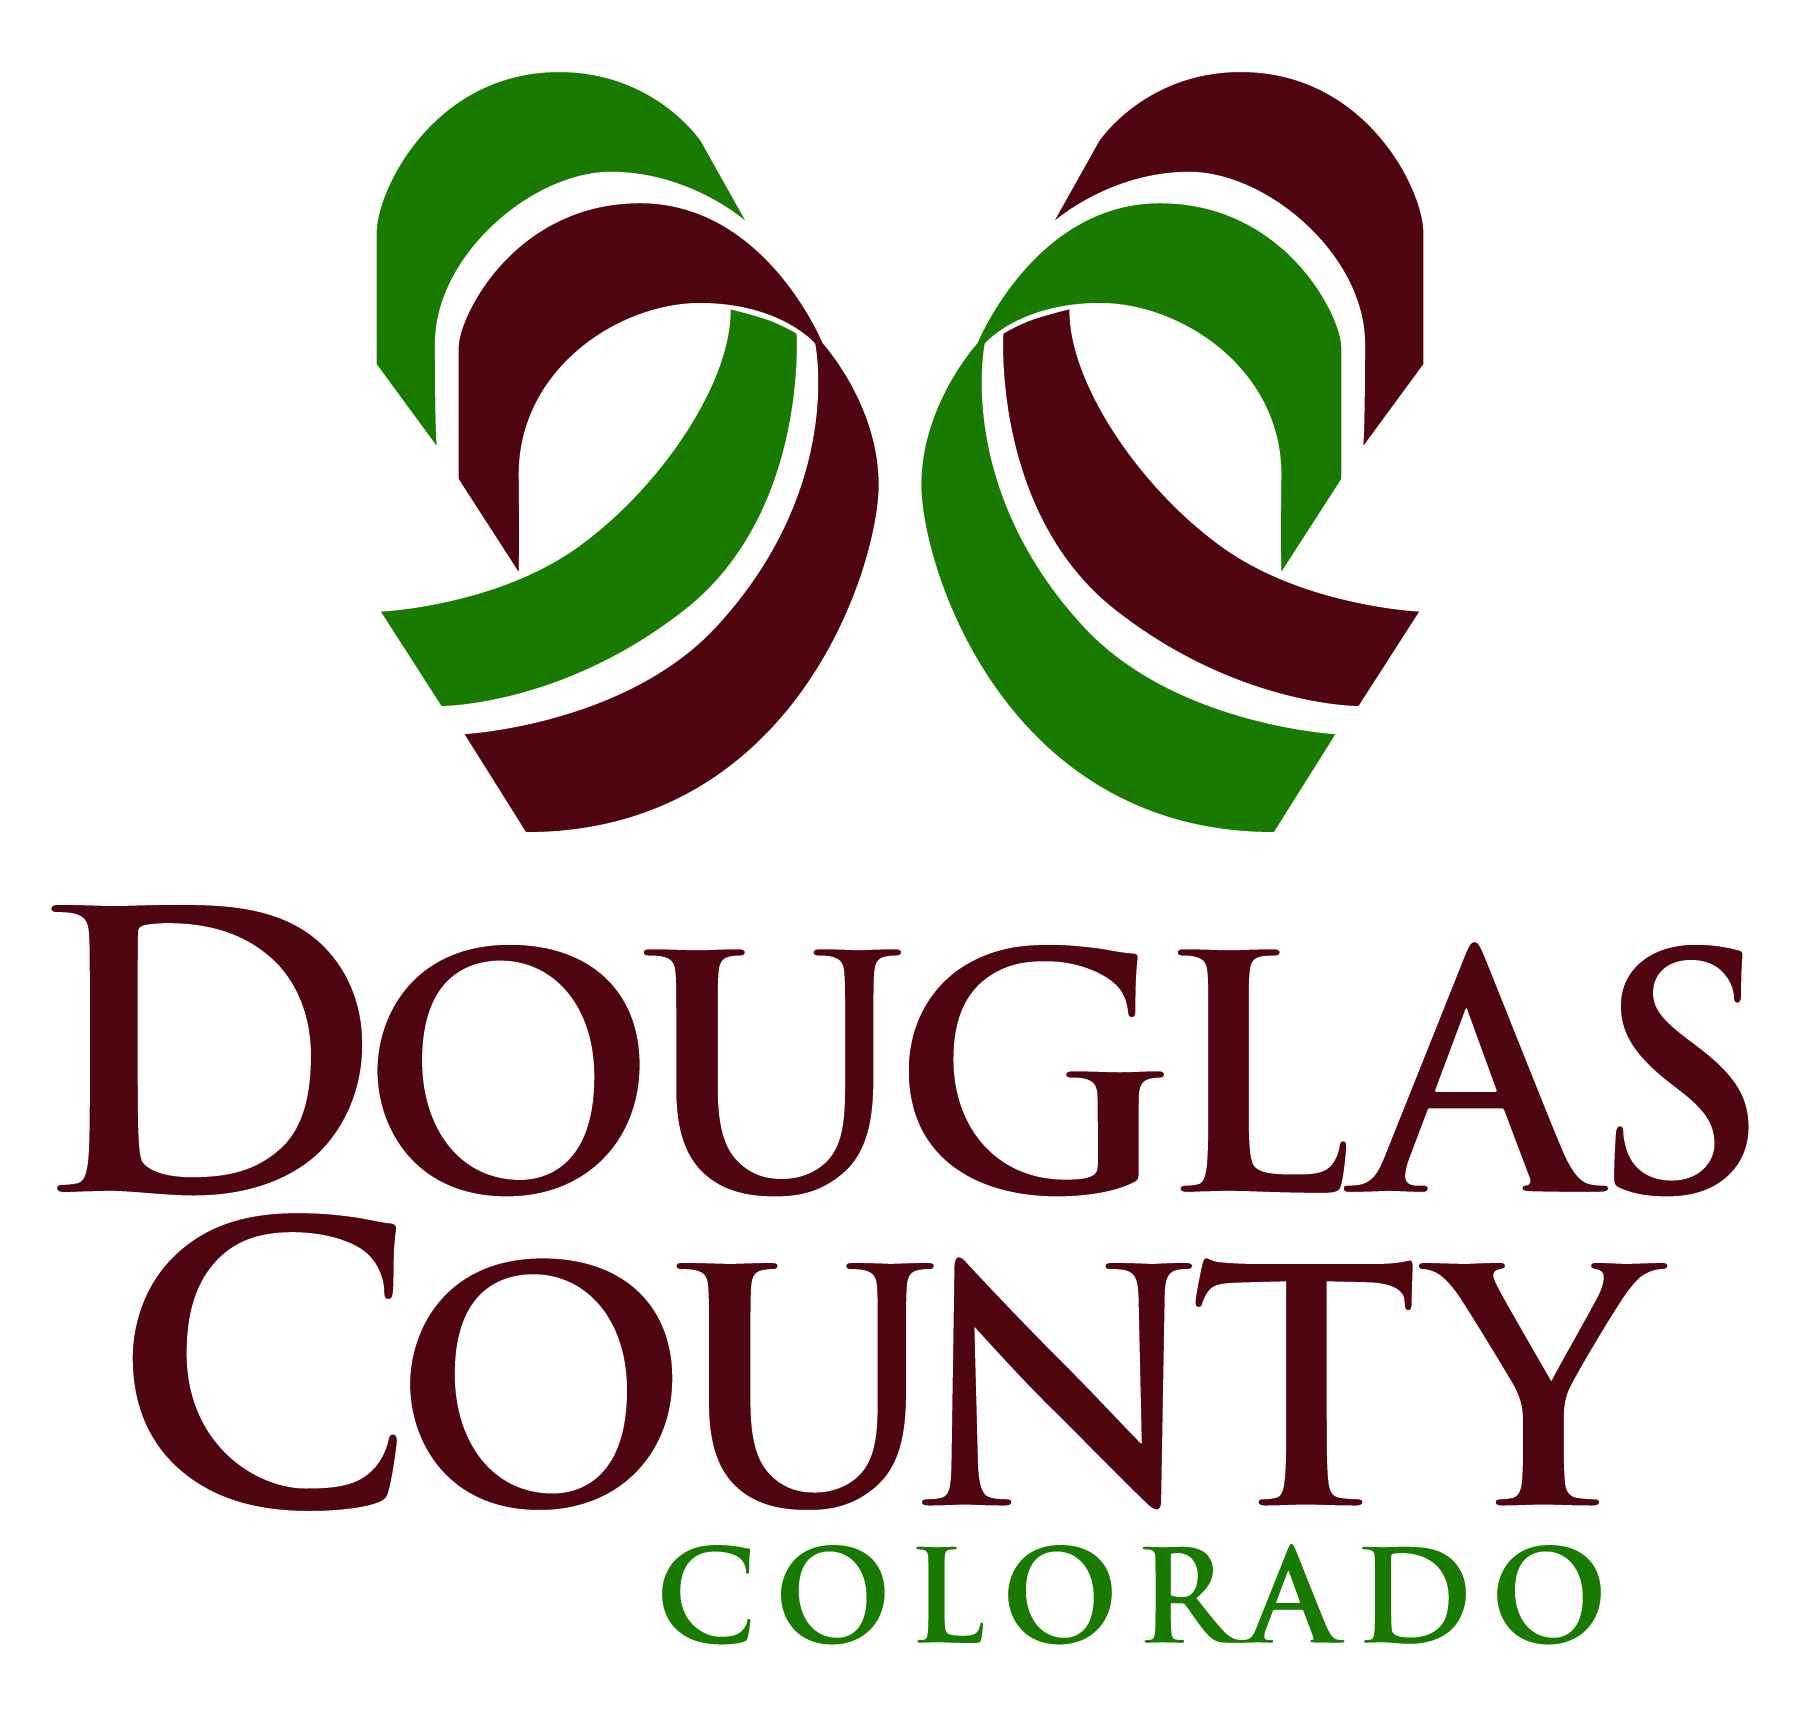 Organization logo of Douglas County Engineering